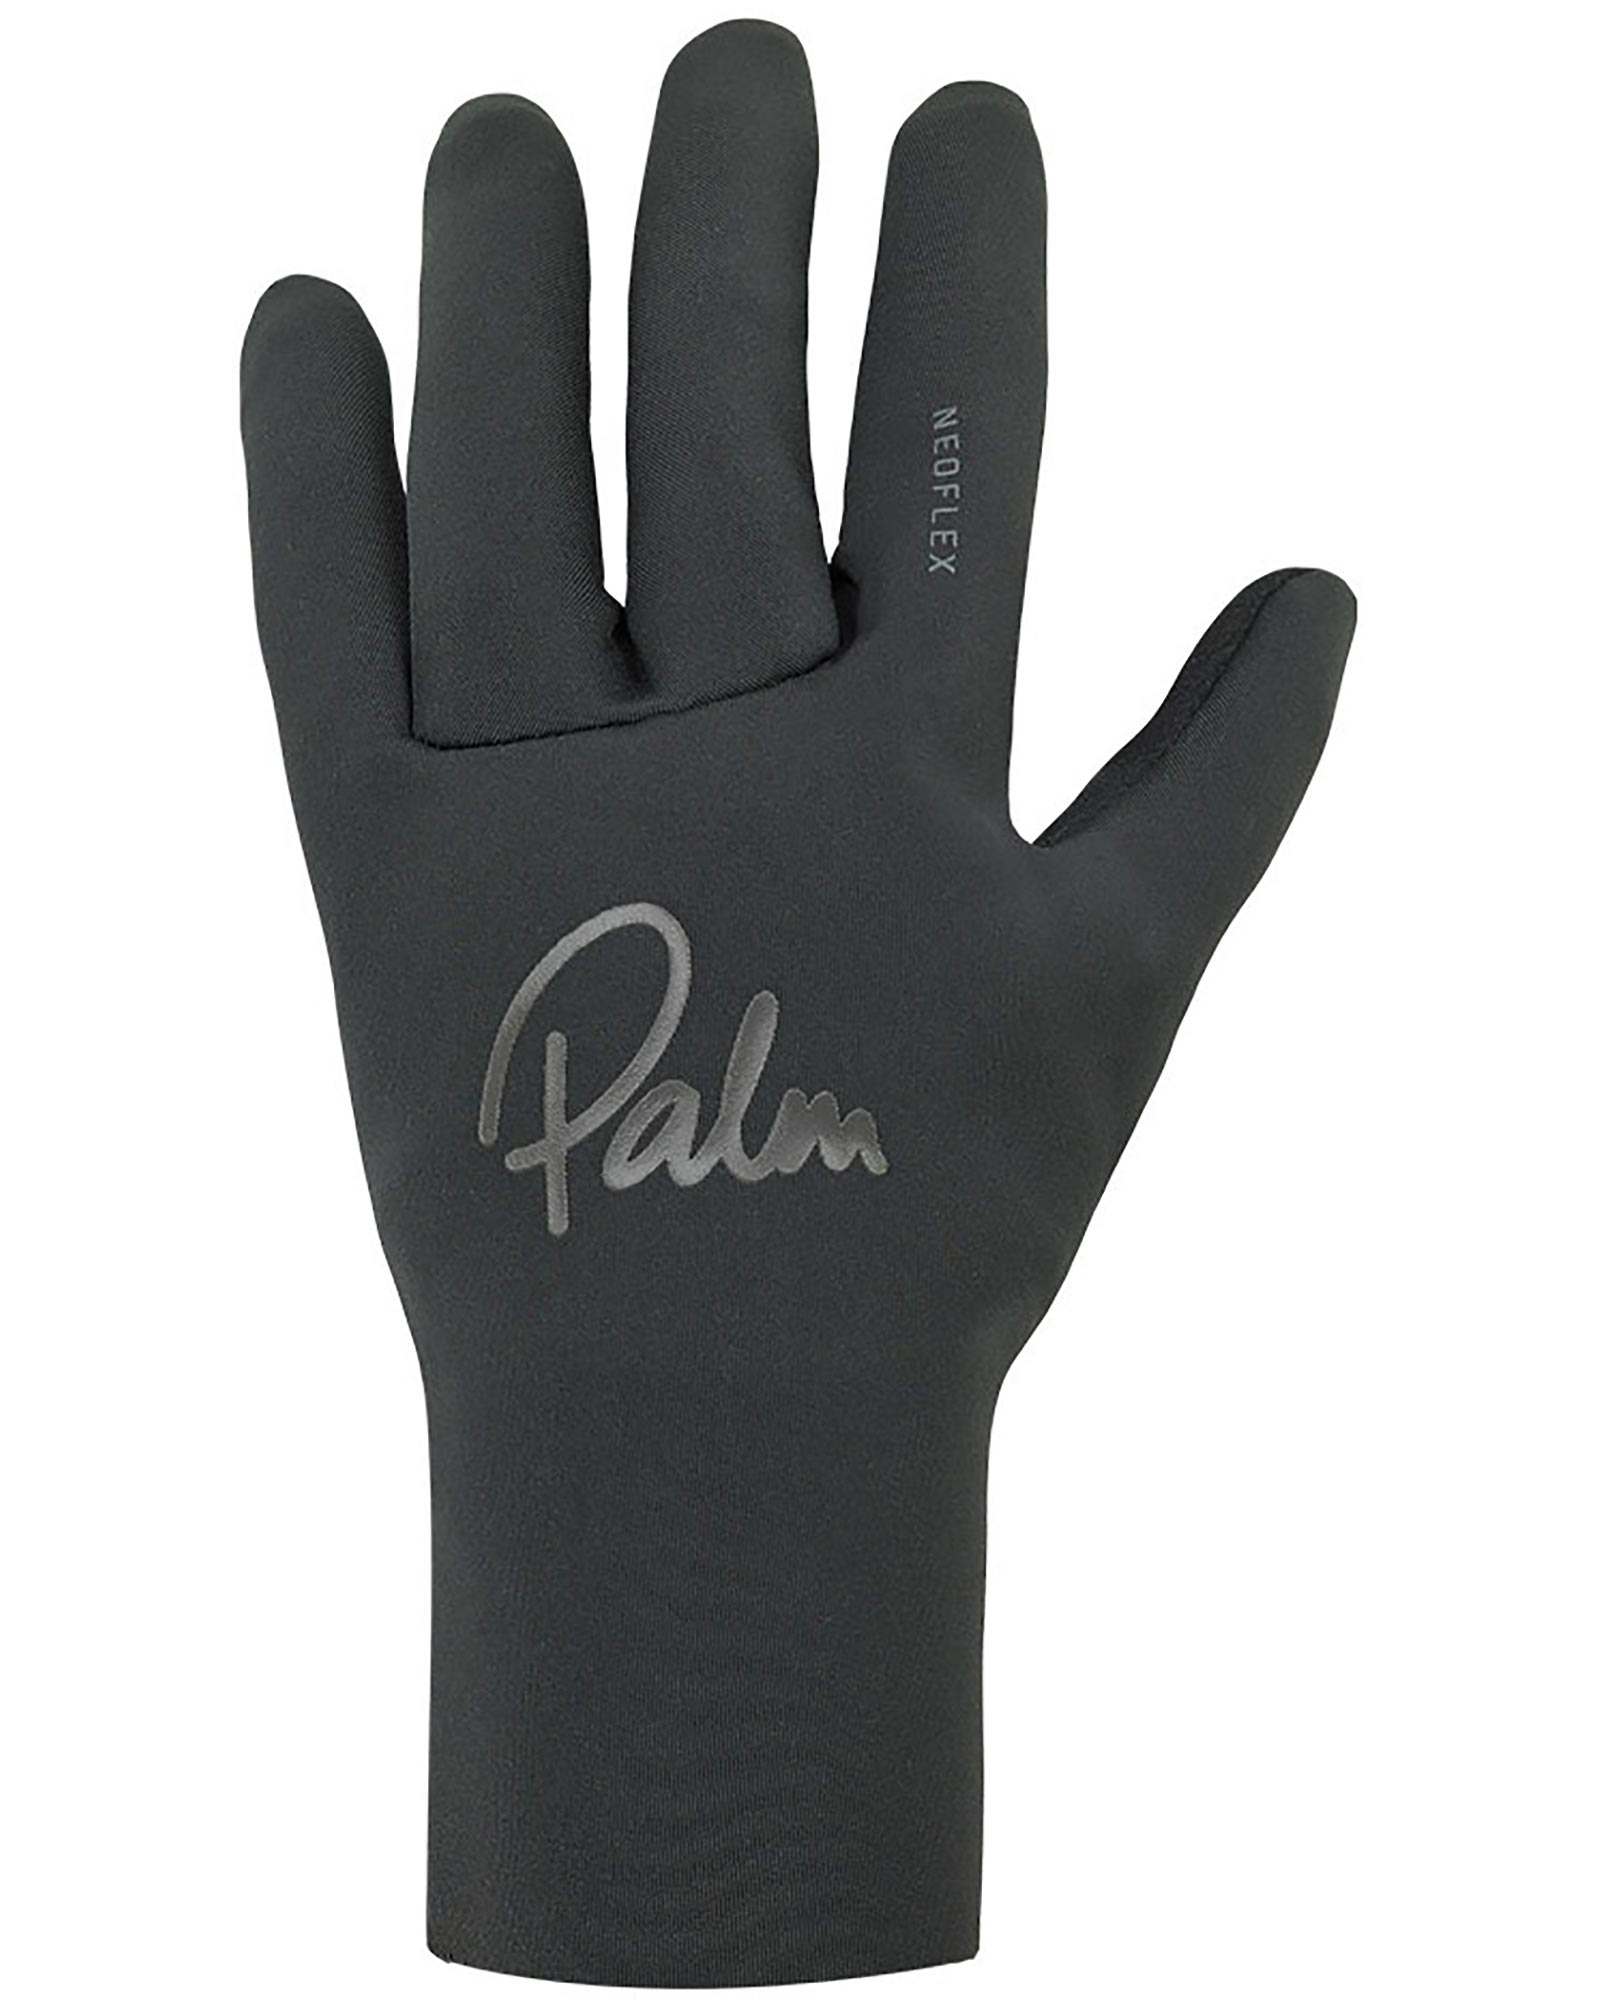 Palm NeoFlex Gloves - Jet Grey XL